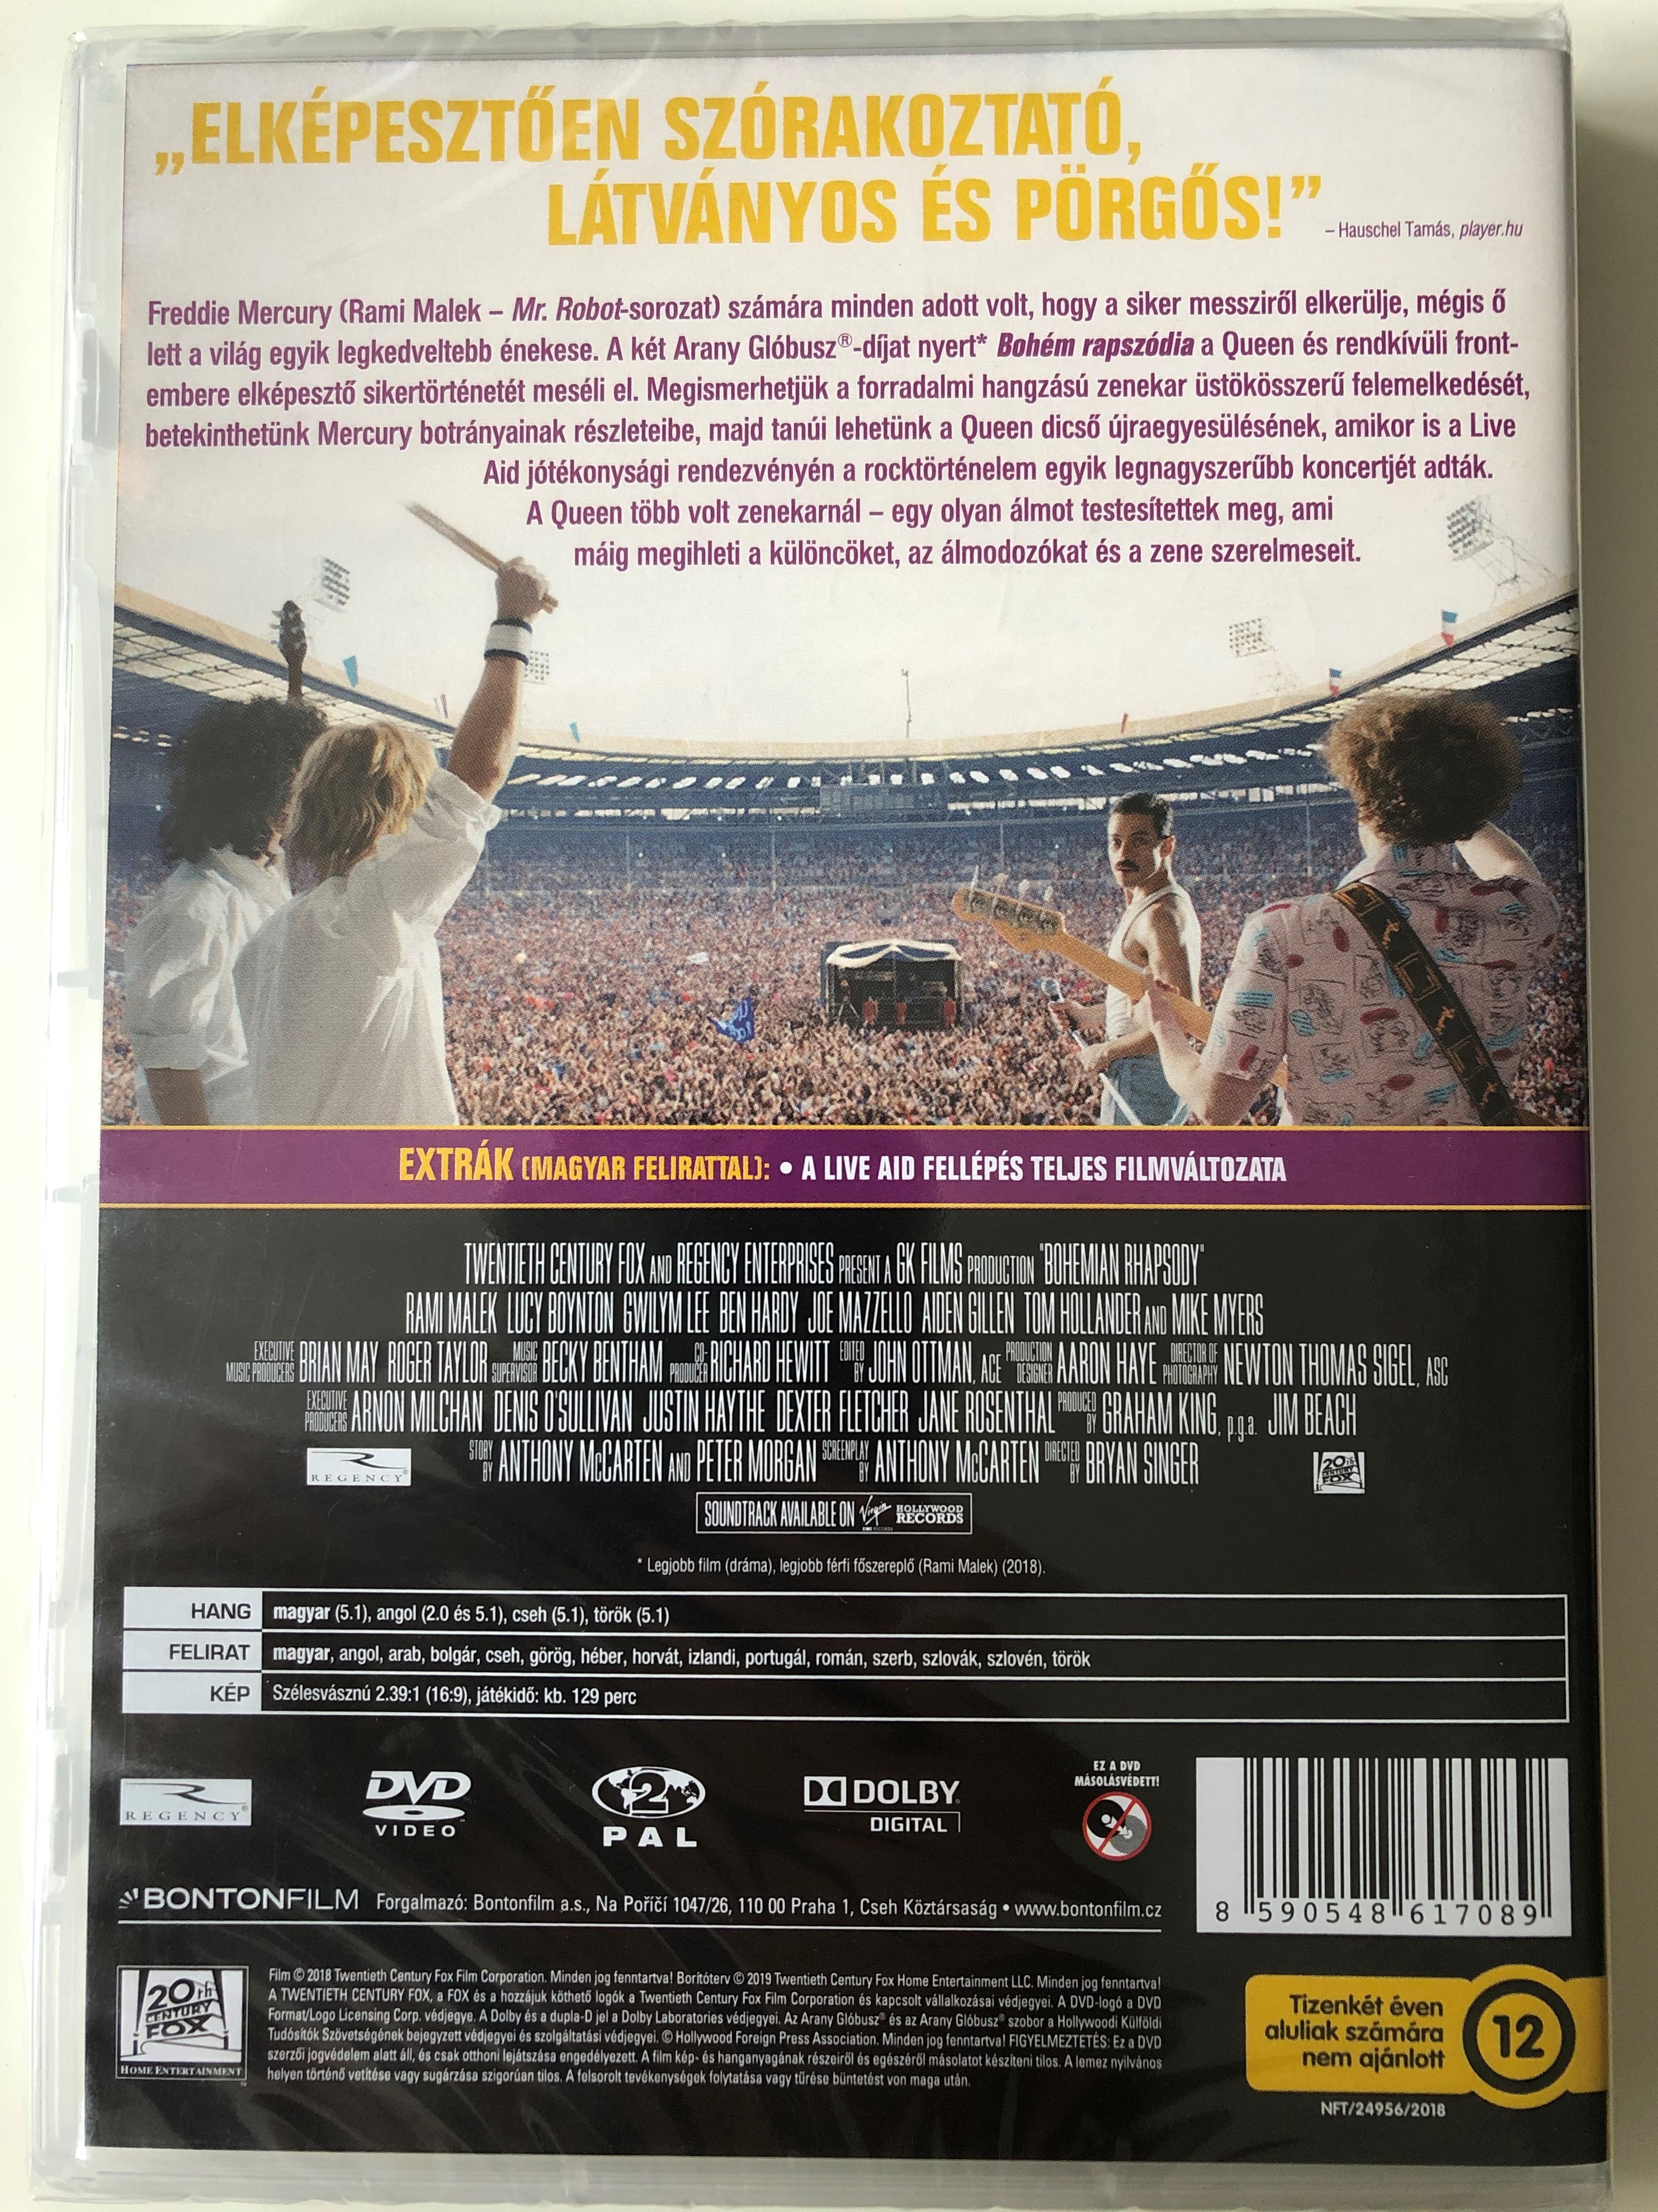 Bohemian Rhapsody DVD 2018 Bohém Rapszódia / Directed by Bryan Singer /  Starring: Rami Malek, Lucy Boynton, Gwilym Lee, Ben Hardy / Biographical  drama film - bibleinmylanguage